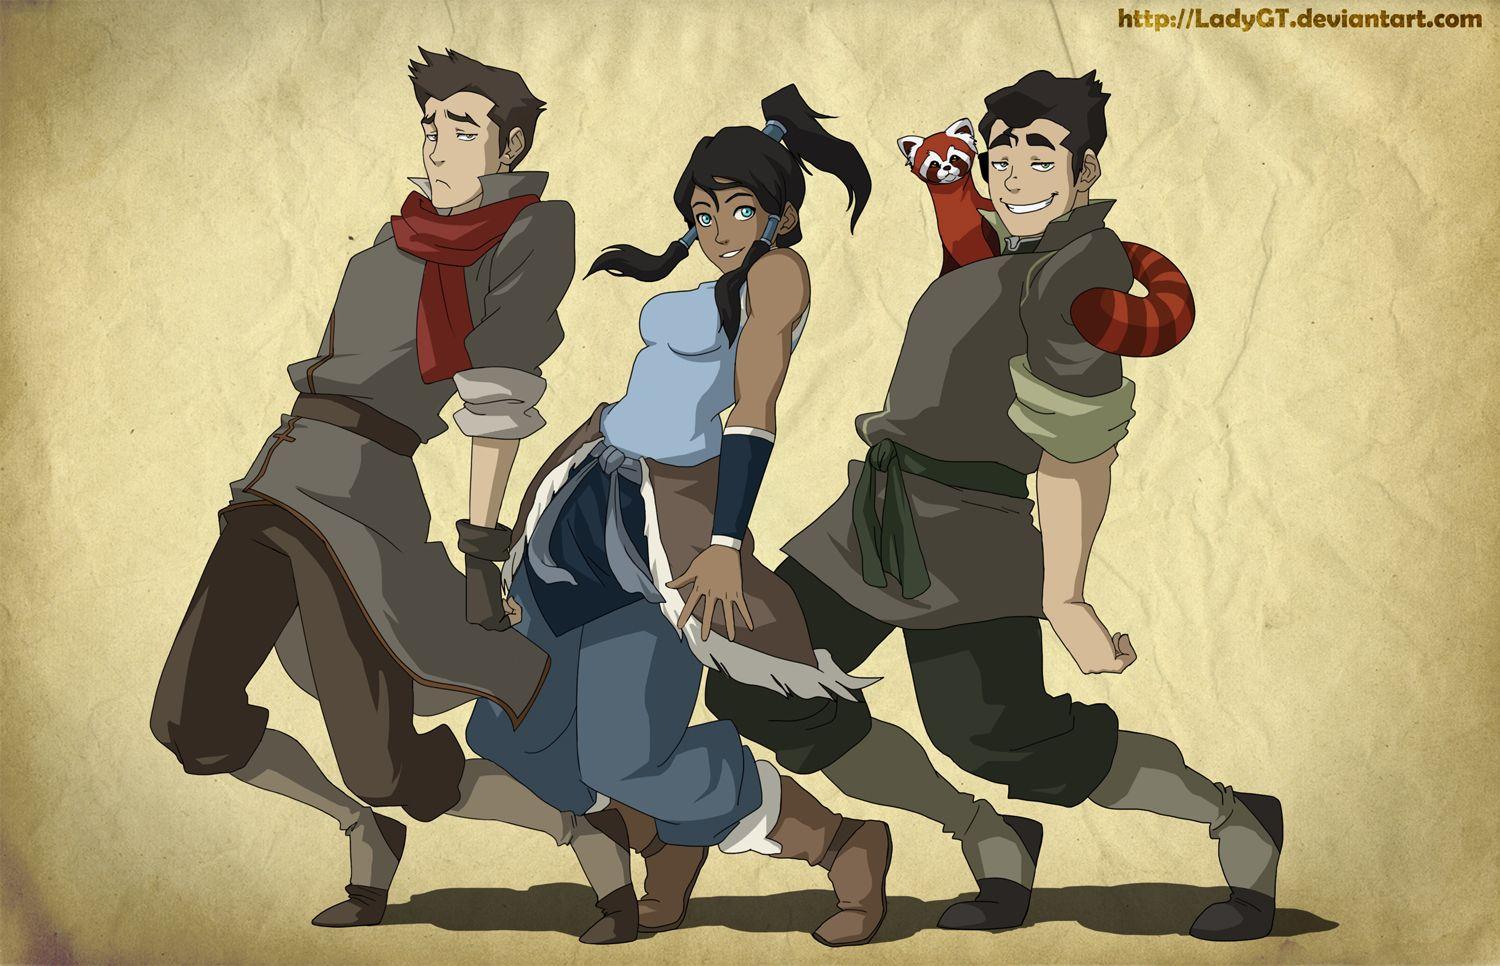 Avatar: The Legend of Korra Anime Image Board